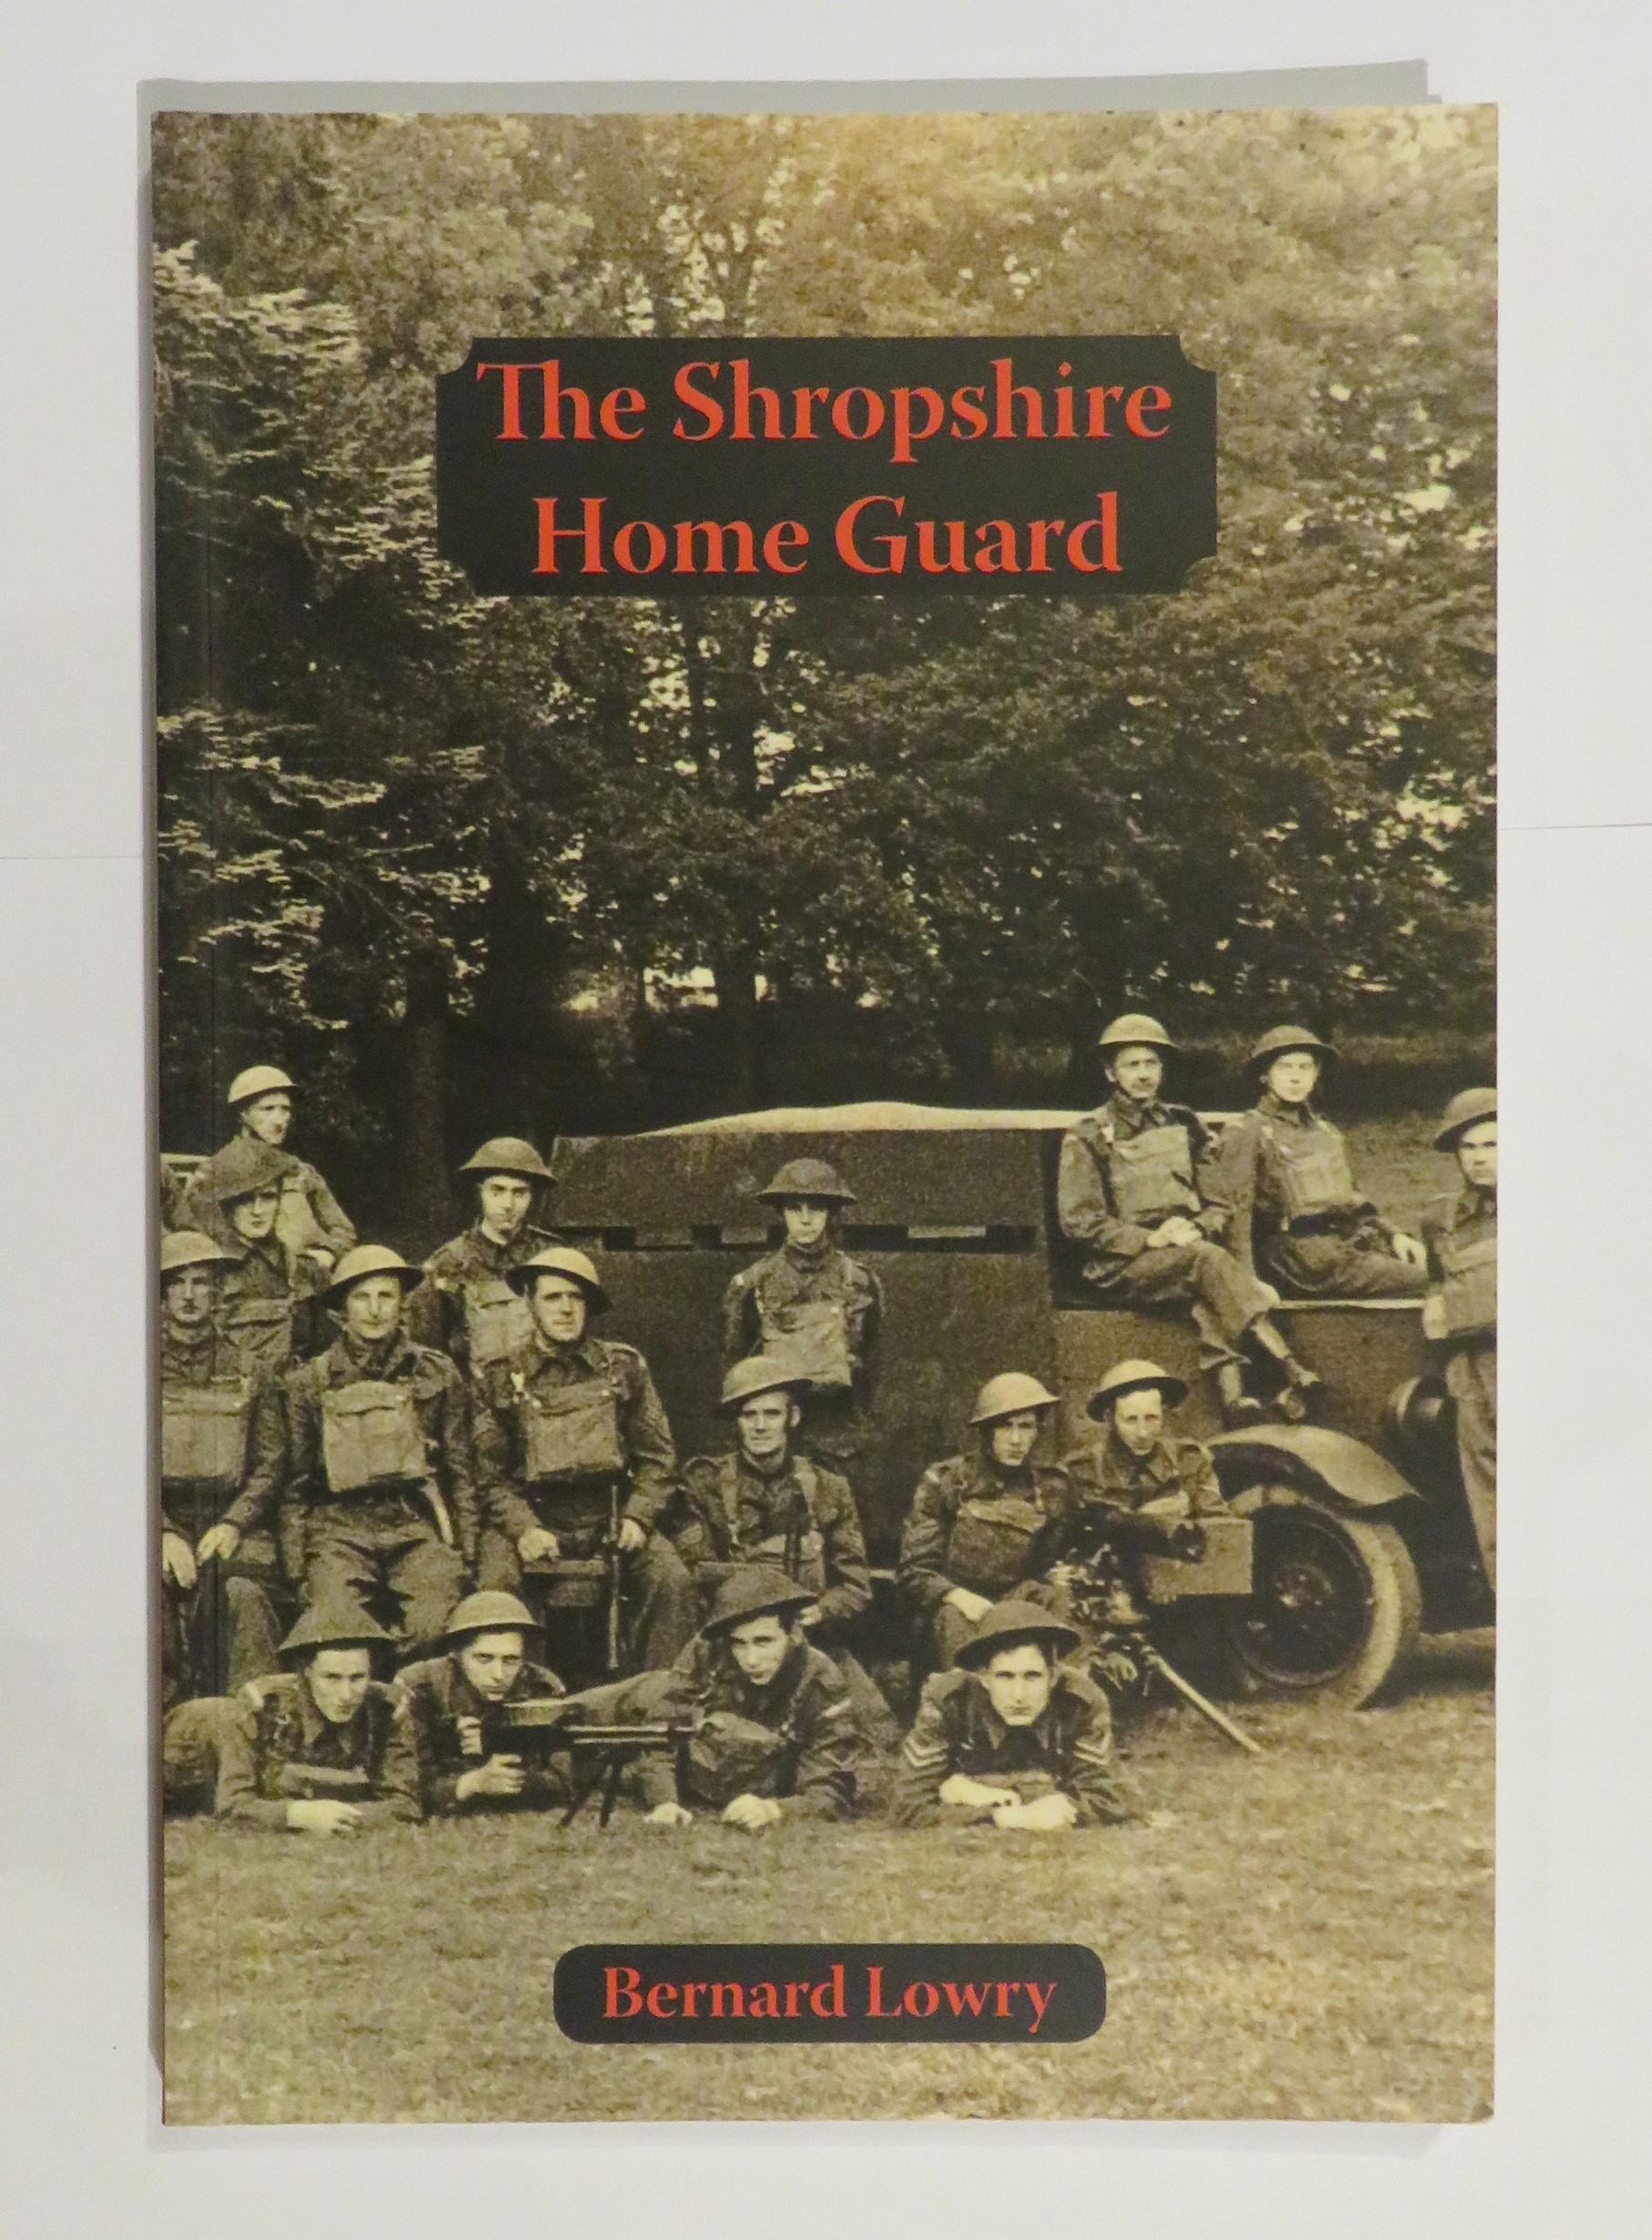 The Shropshire Home Guard